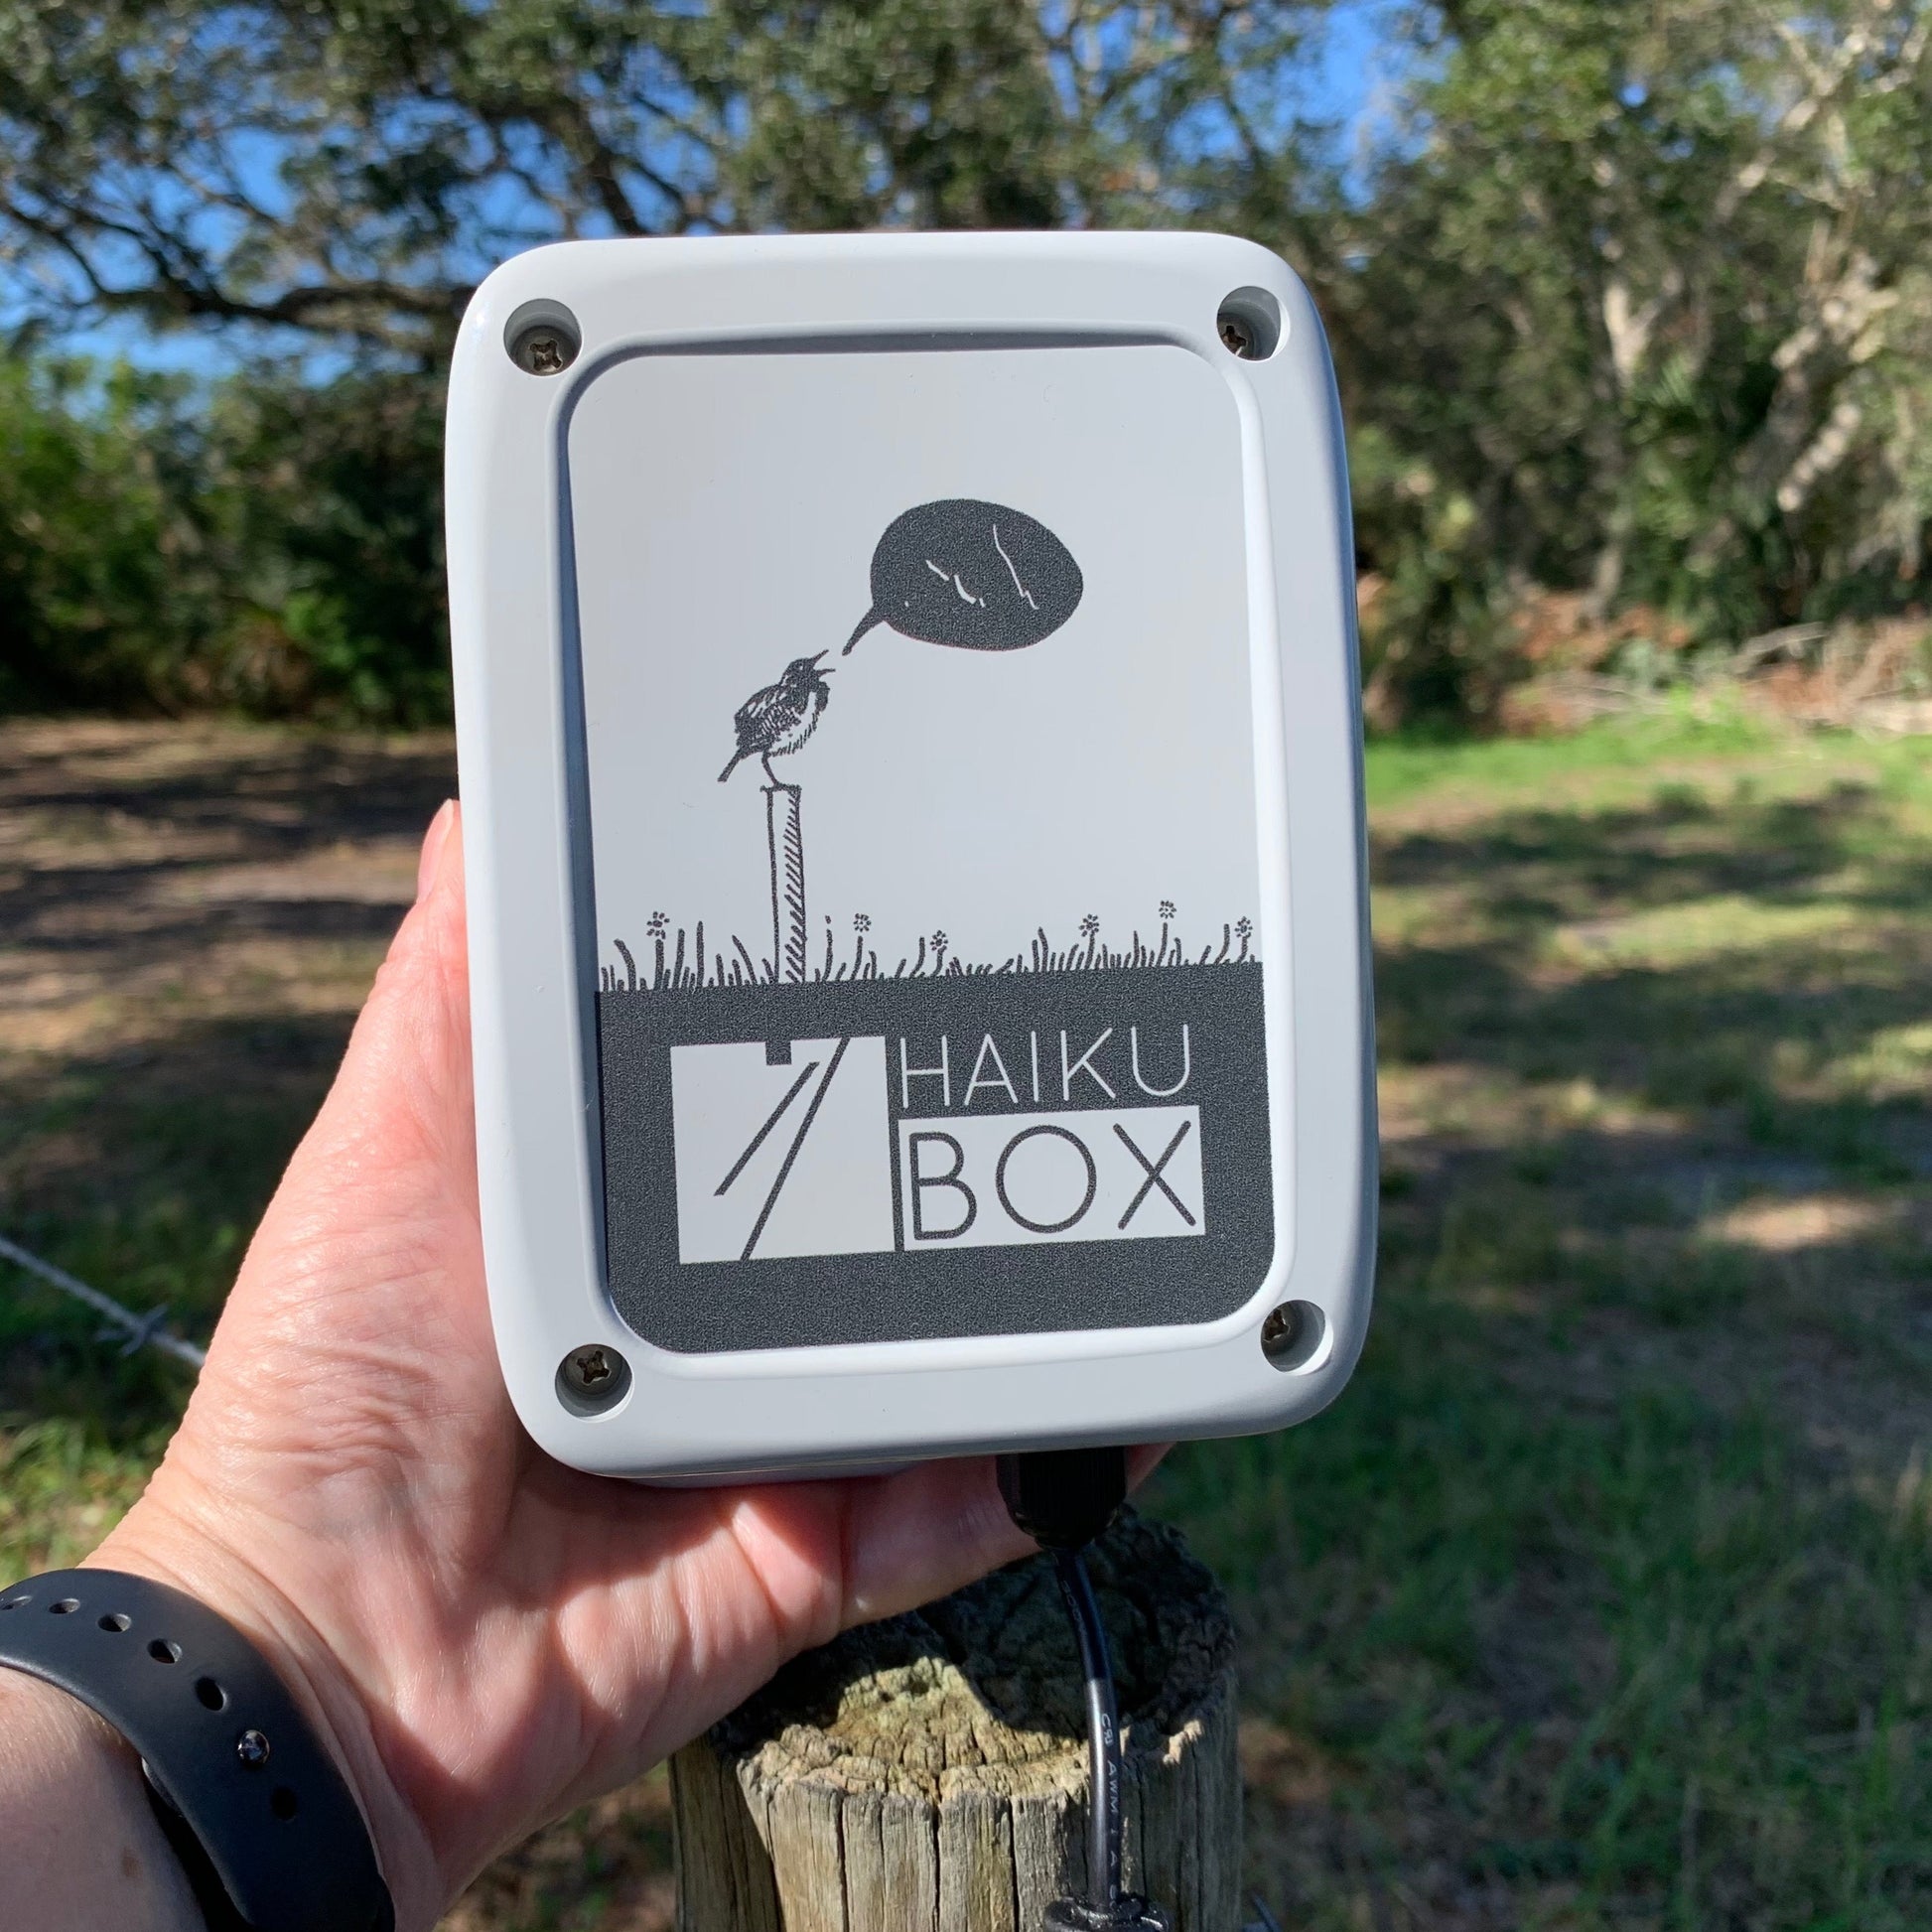 Haikubox a hand sized device to identify birdsong